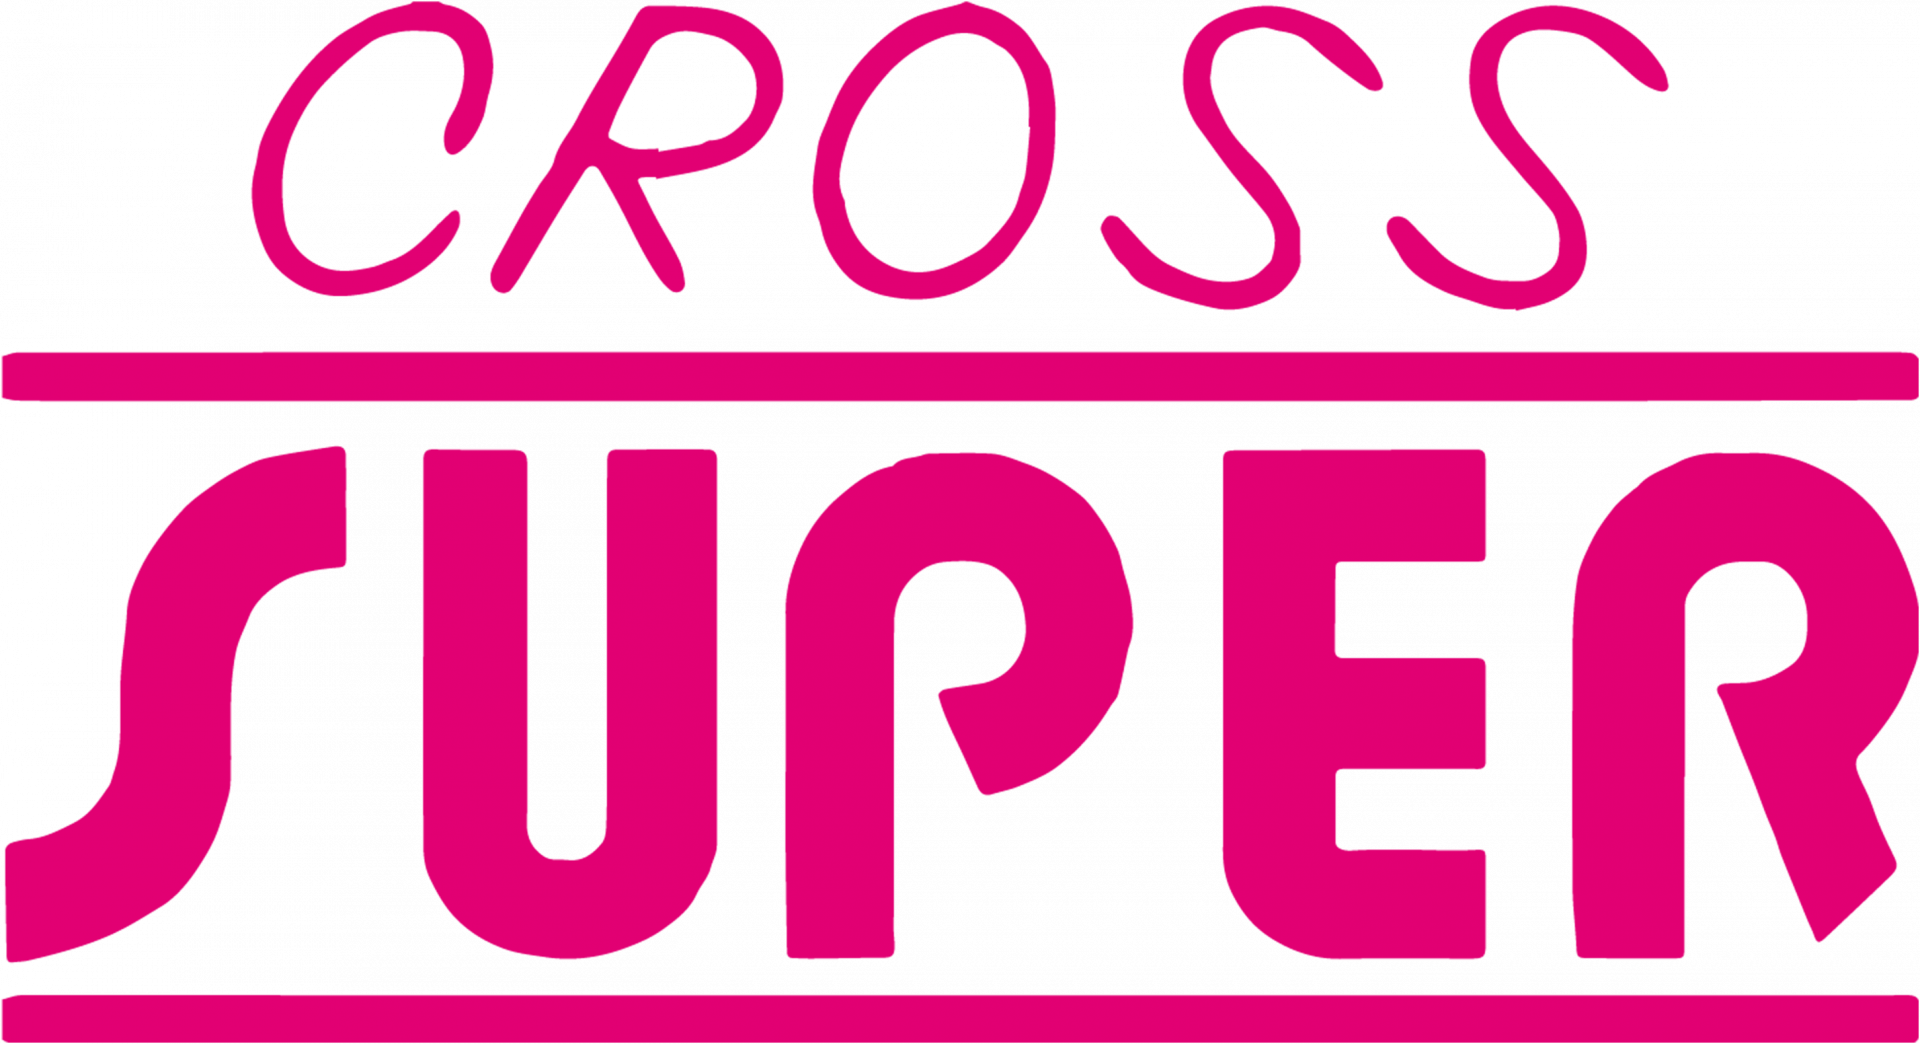 Crosssuper - ครอสซุปเปอร์